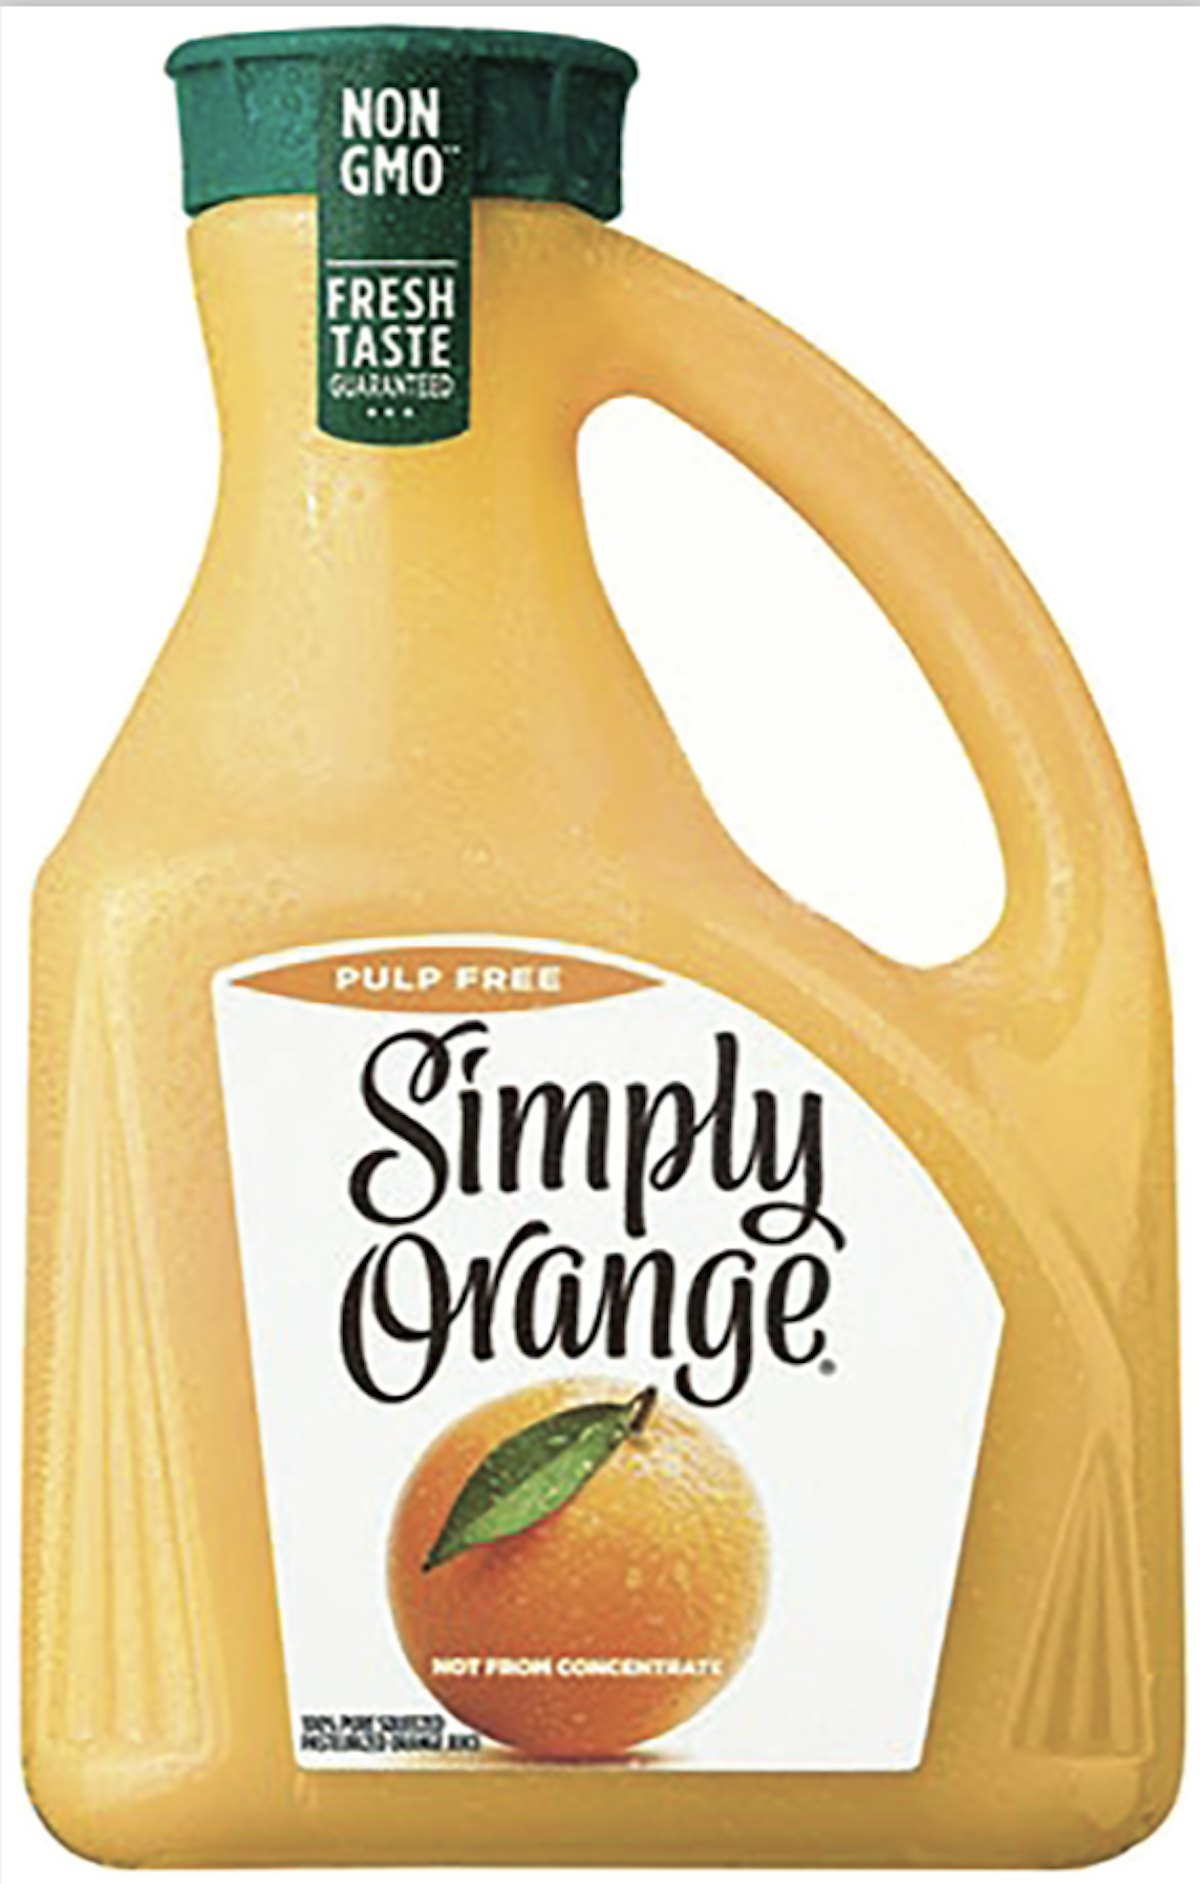 Good Way to Reuse Orange Juice Containers 